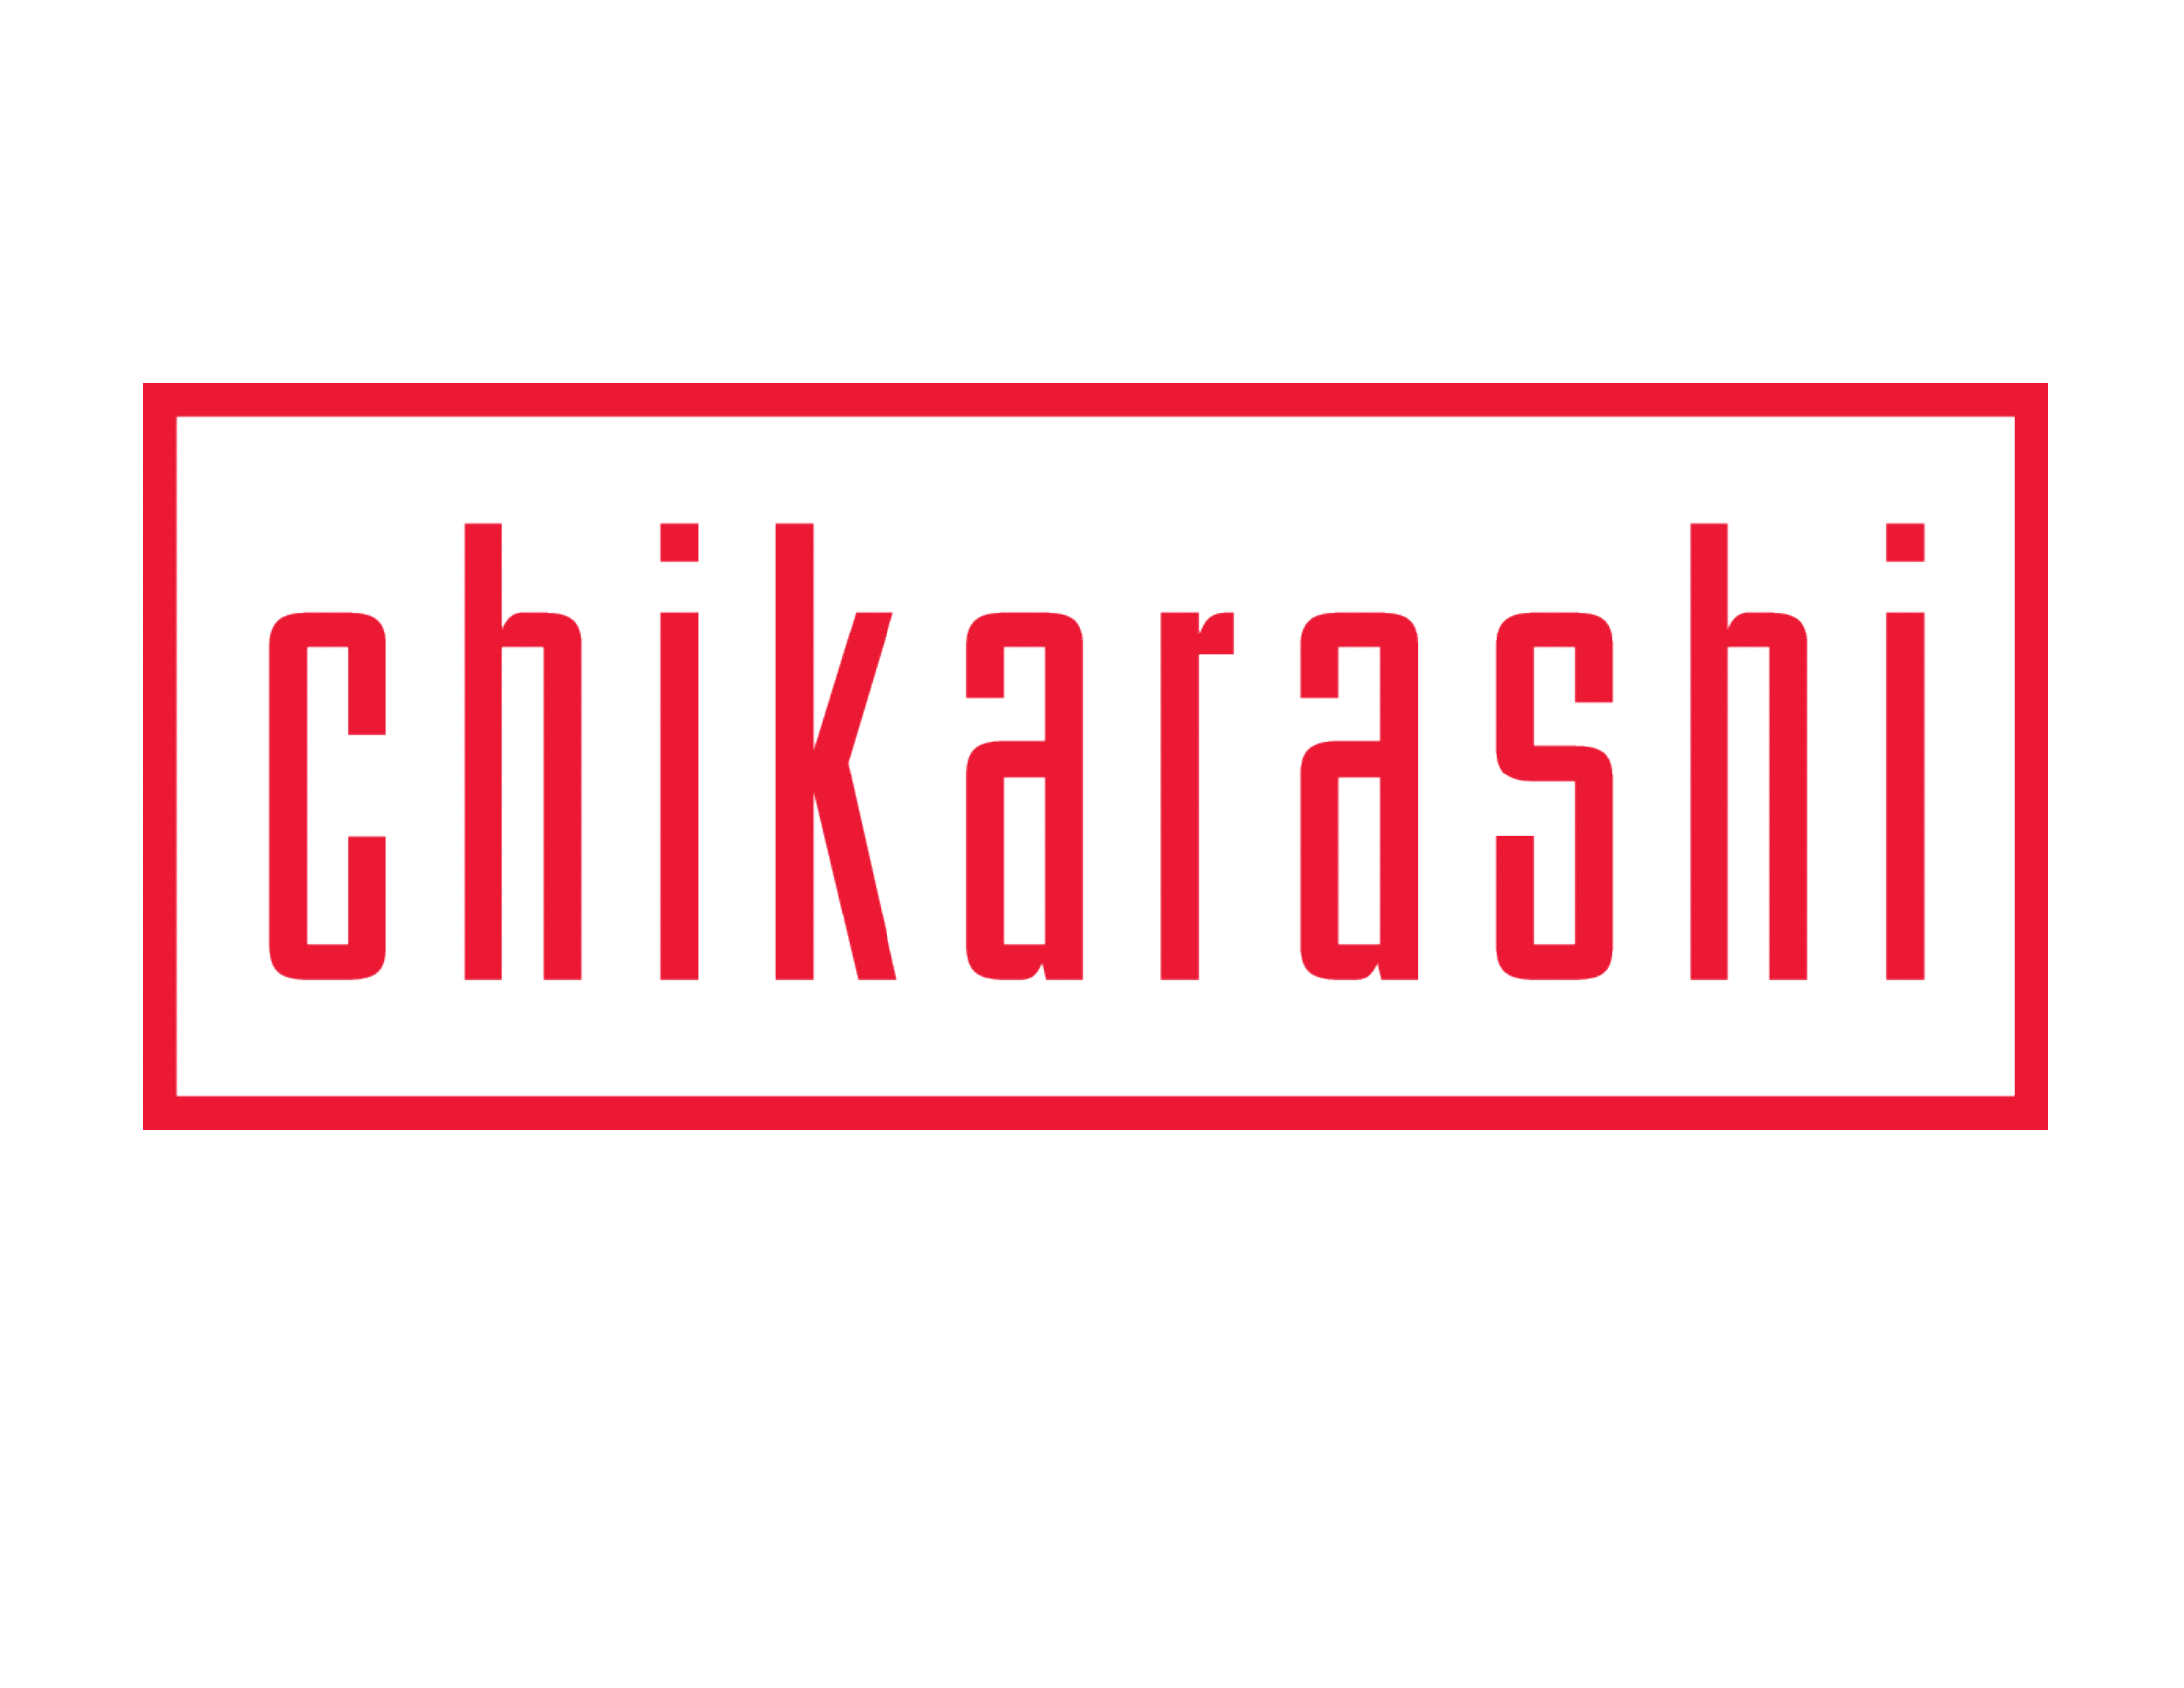 Chikarashi_logo-1.png